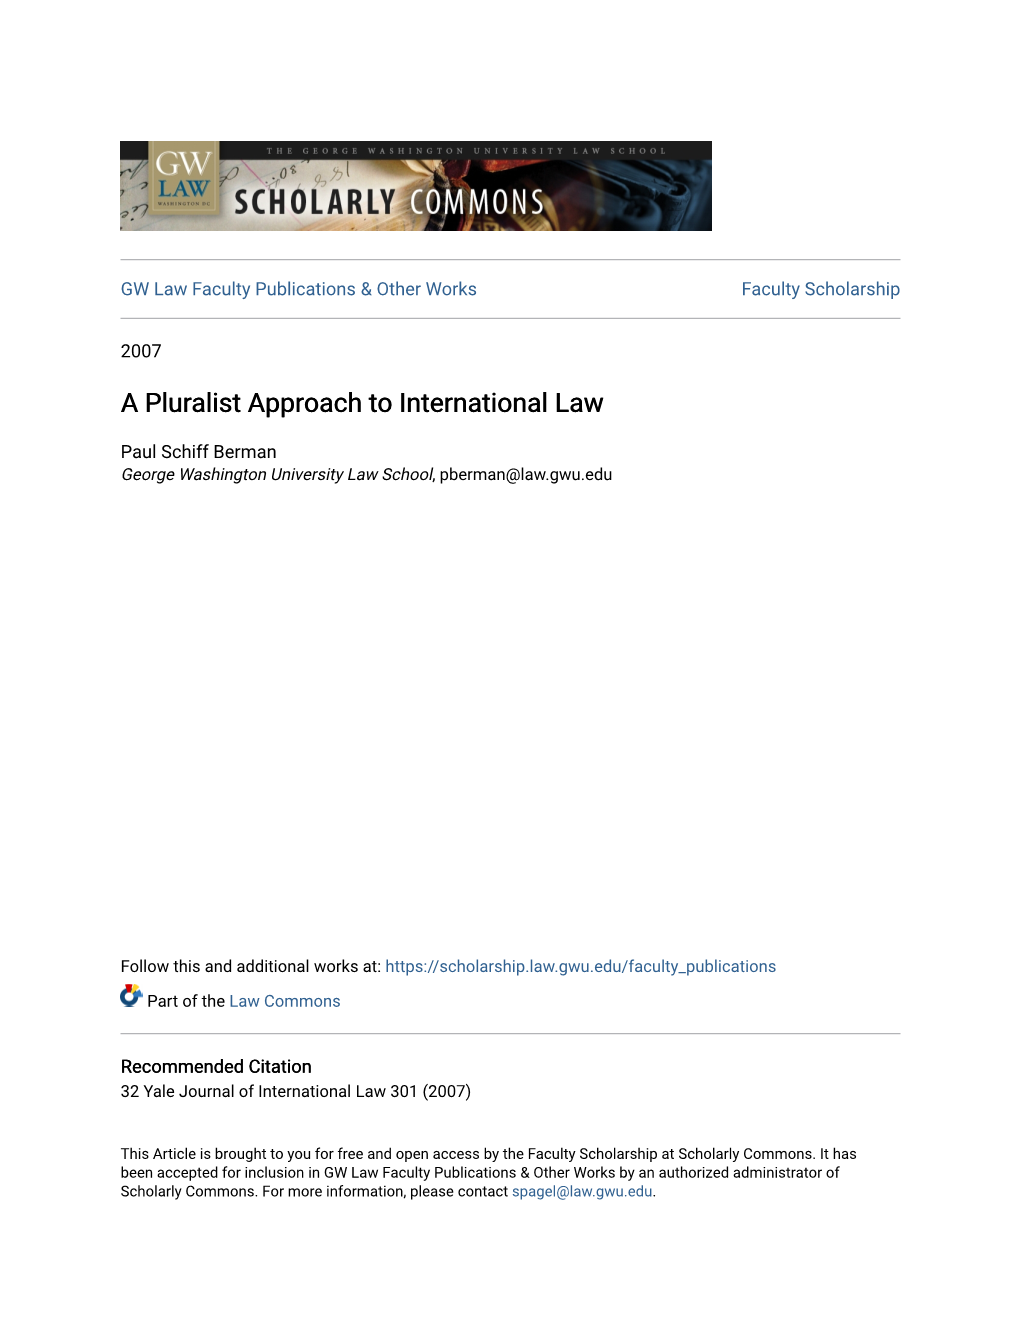 A Pluralist Approach to International Law